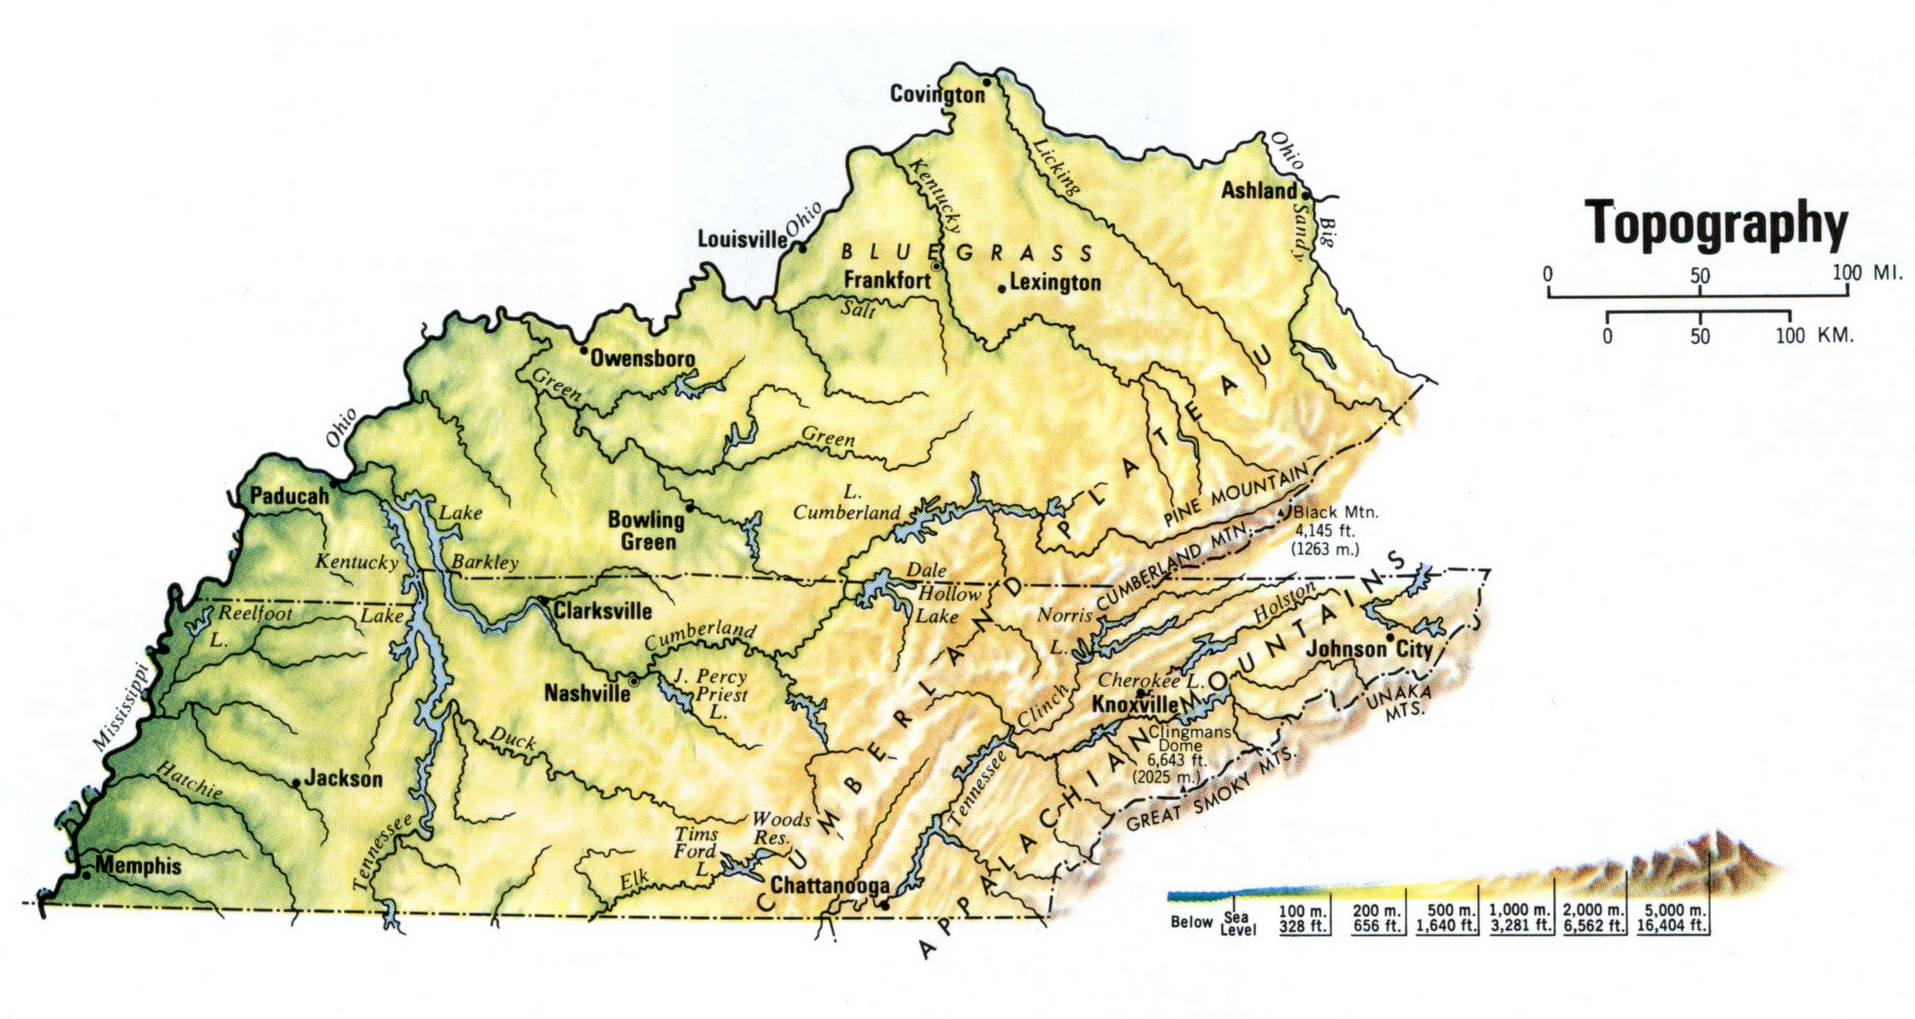 Kentucky topography map